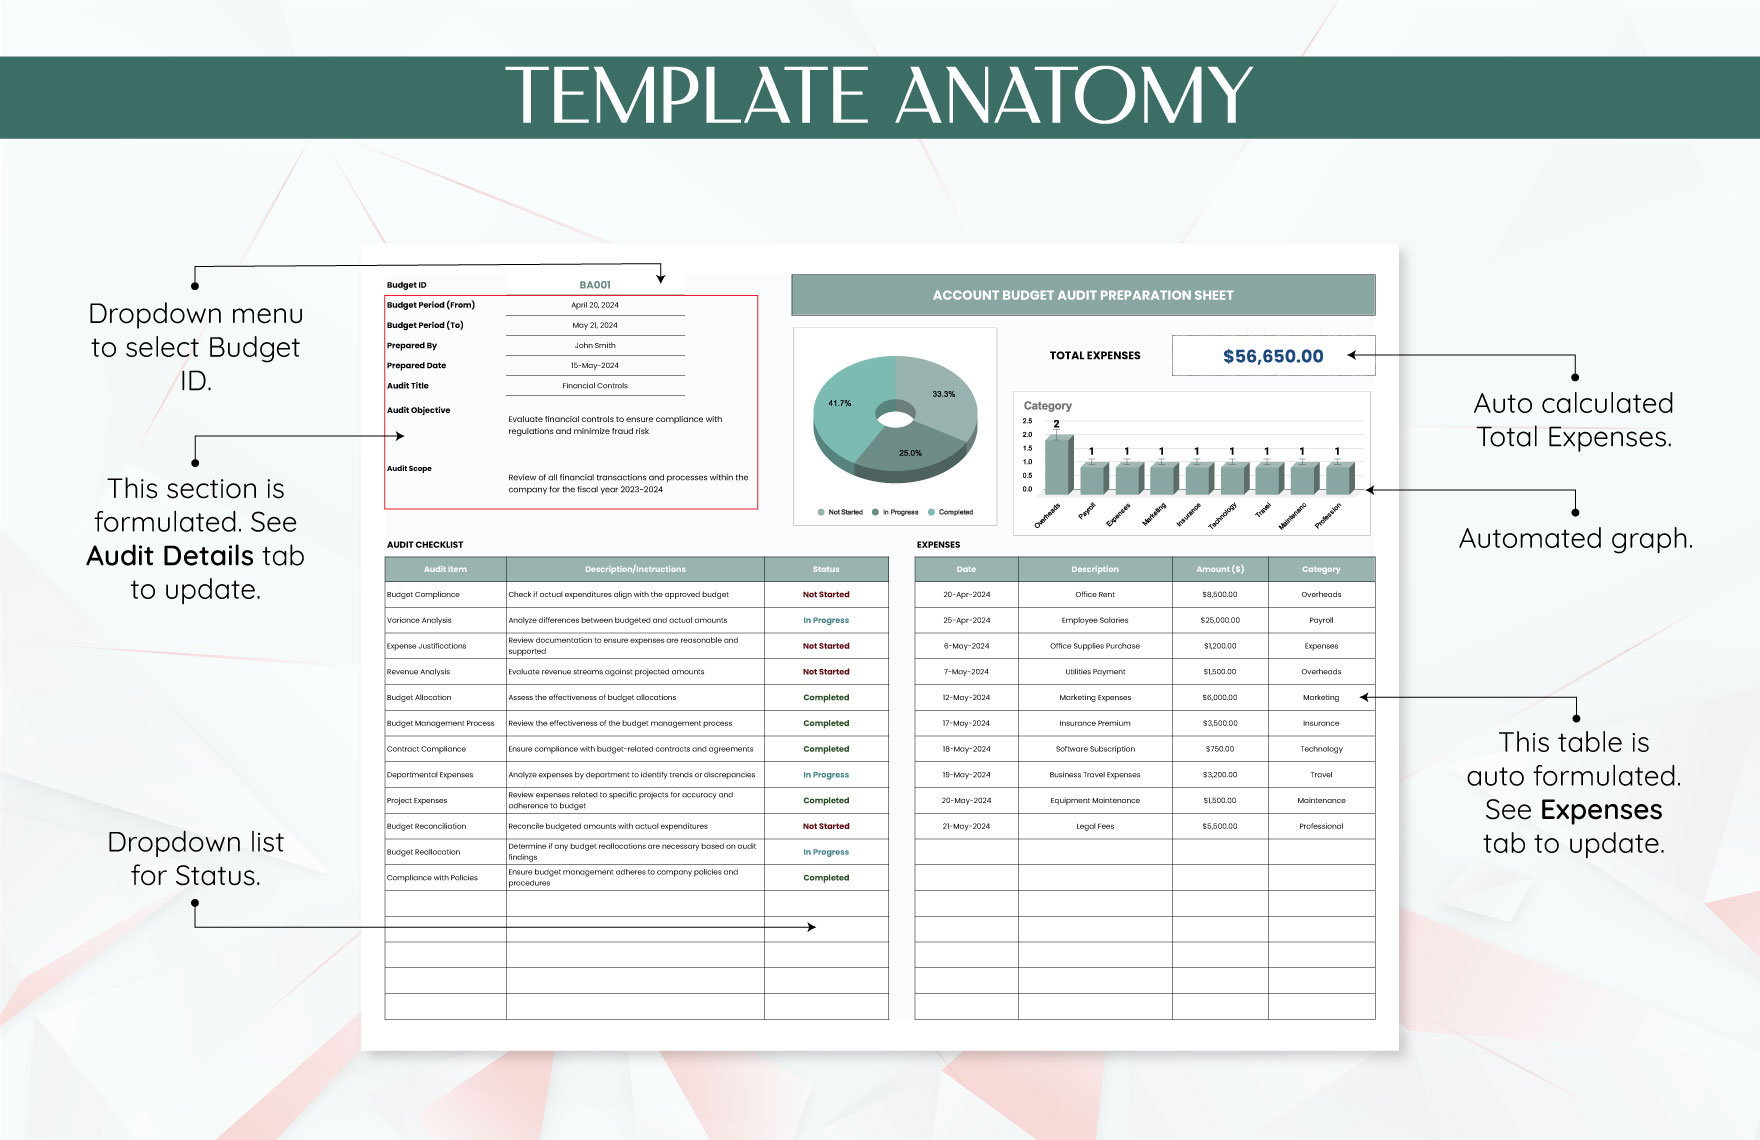 Account Budget Audit Preparation Sheet Template